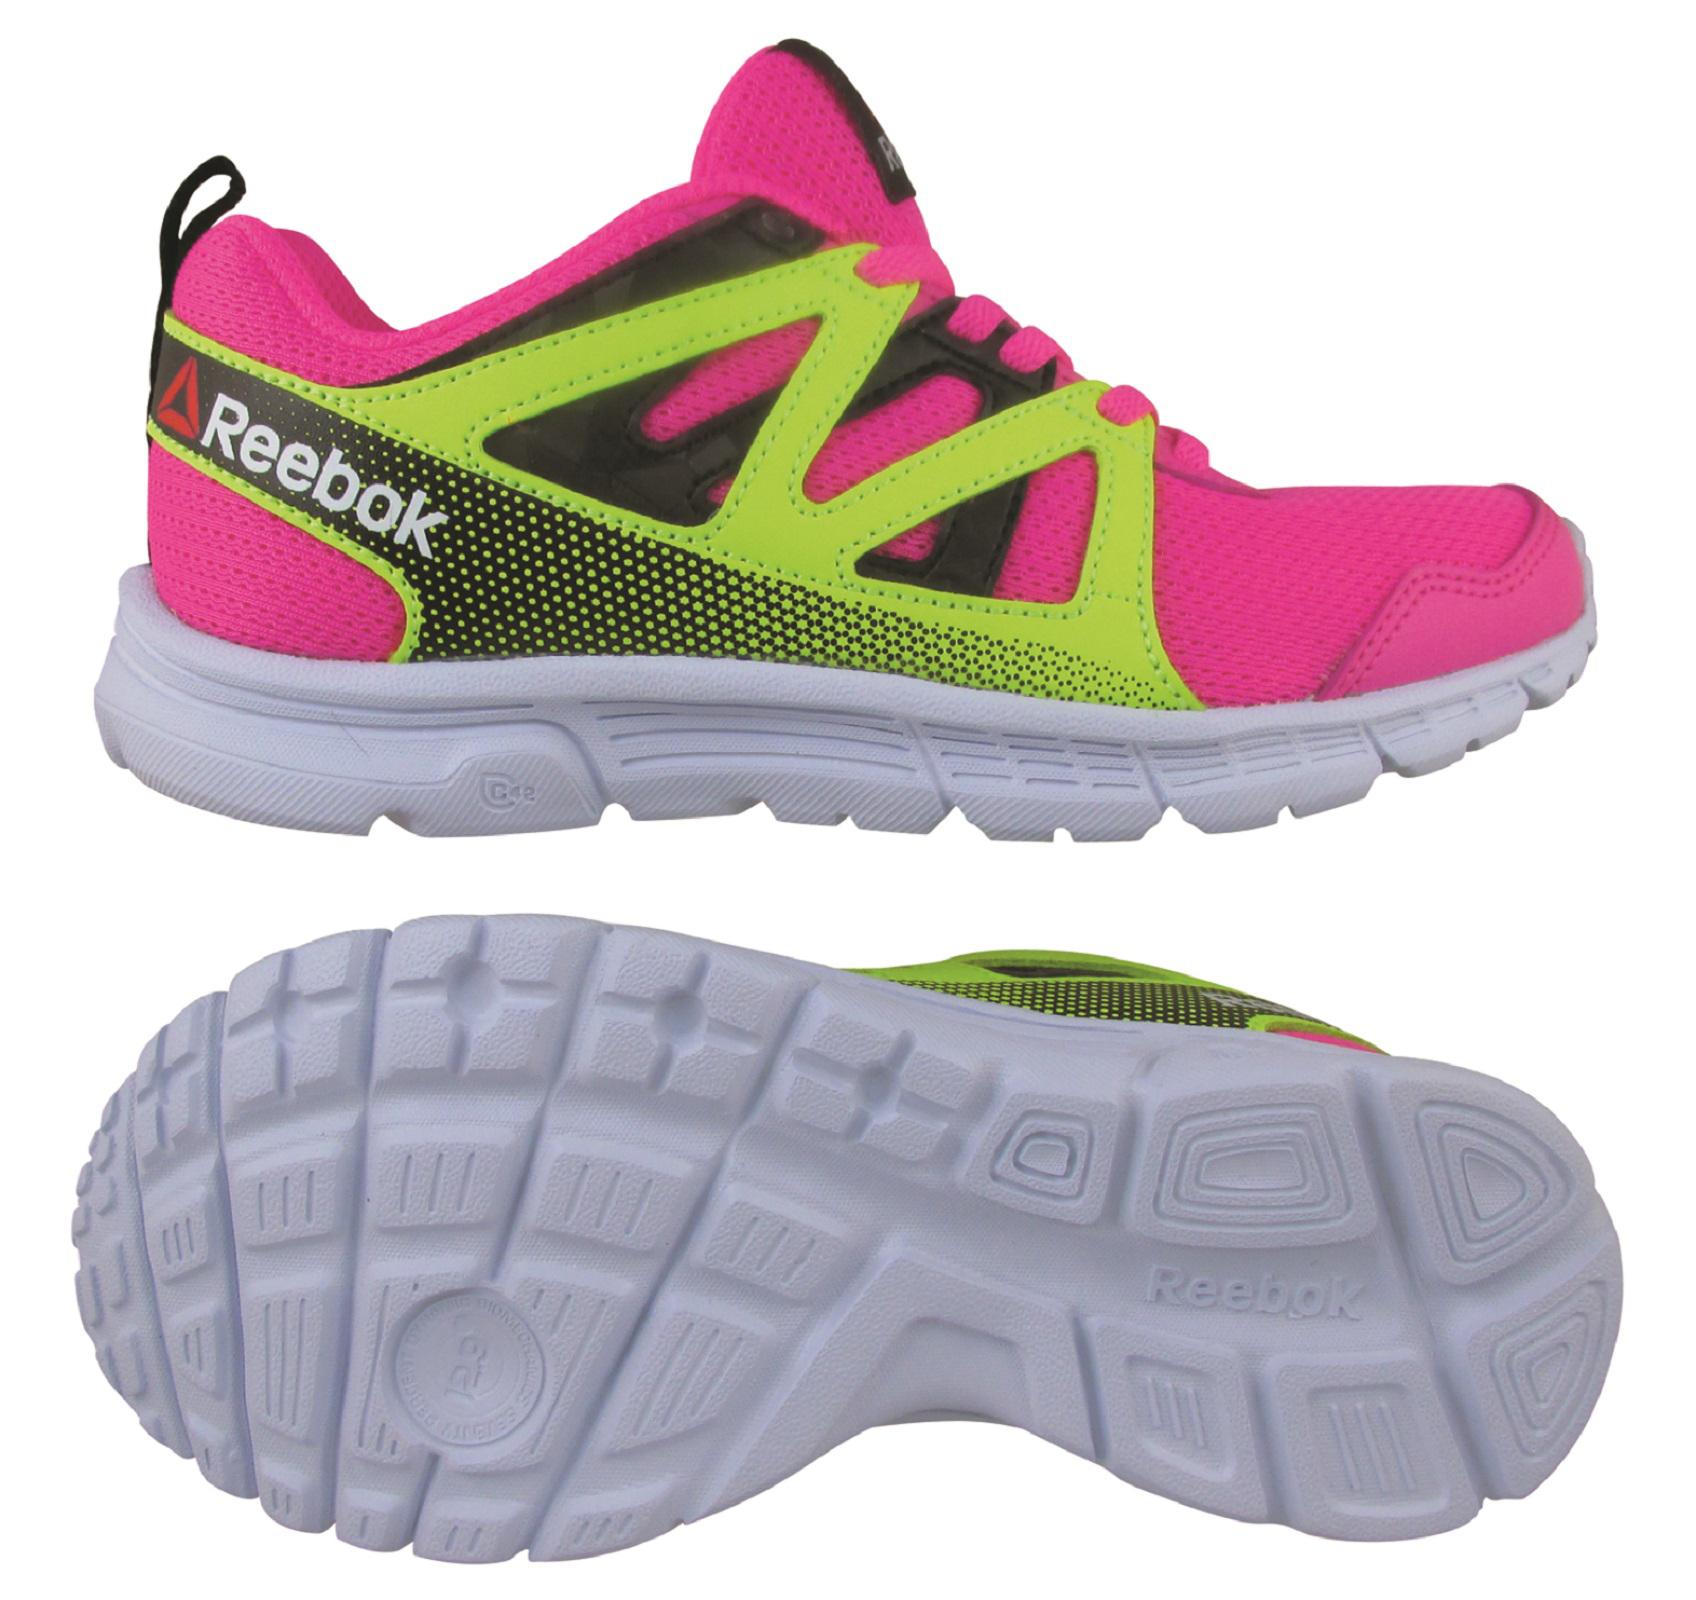 Reebok Girl's Run Supreme 2.0 Pink/Black/Yellow Running Shoe